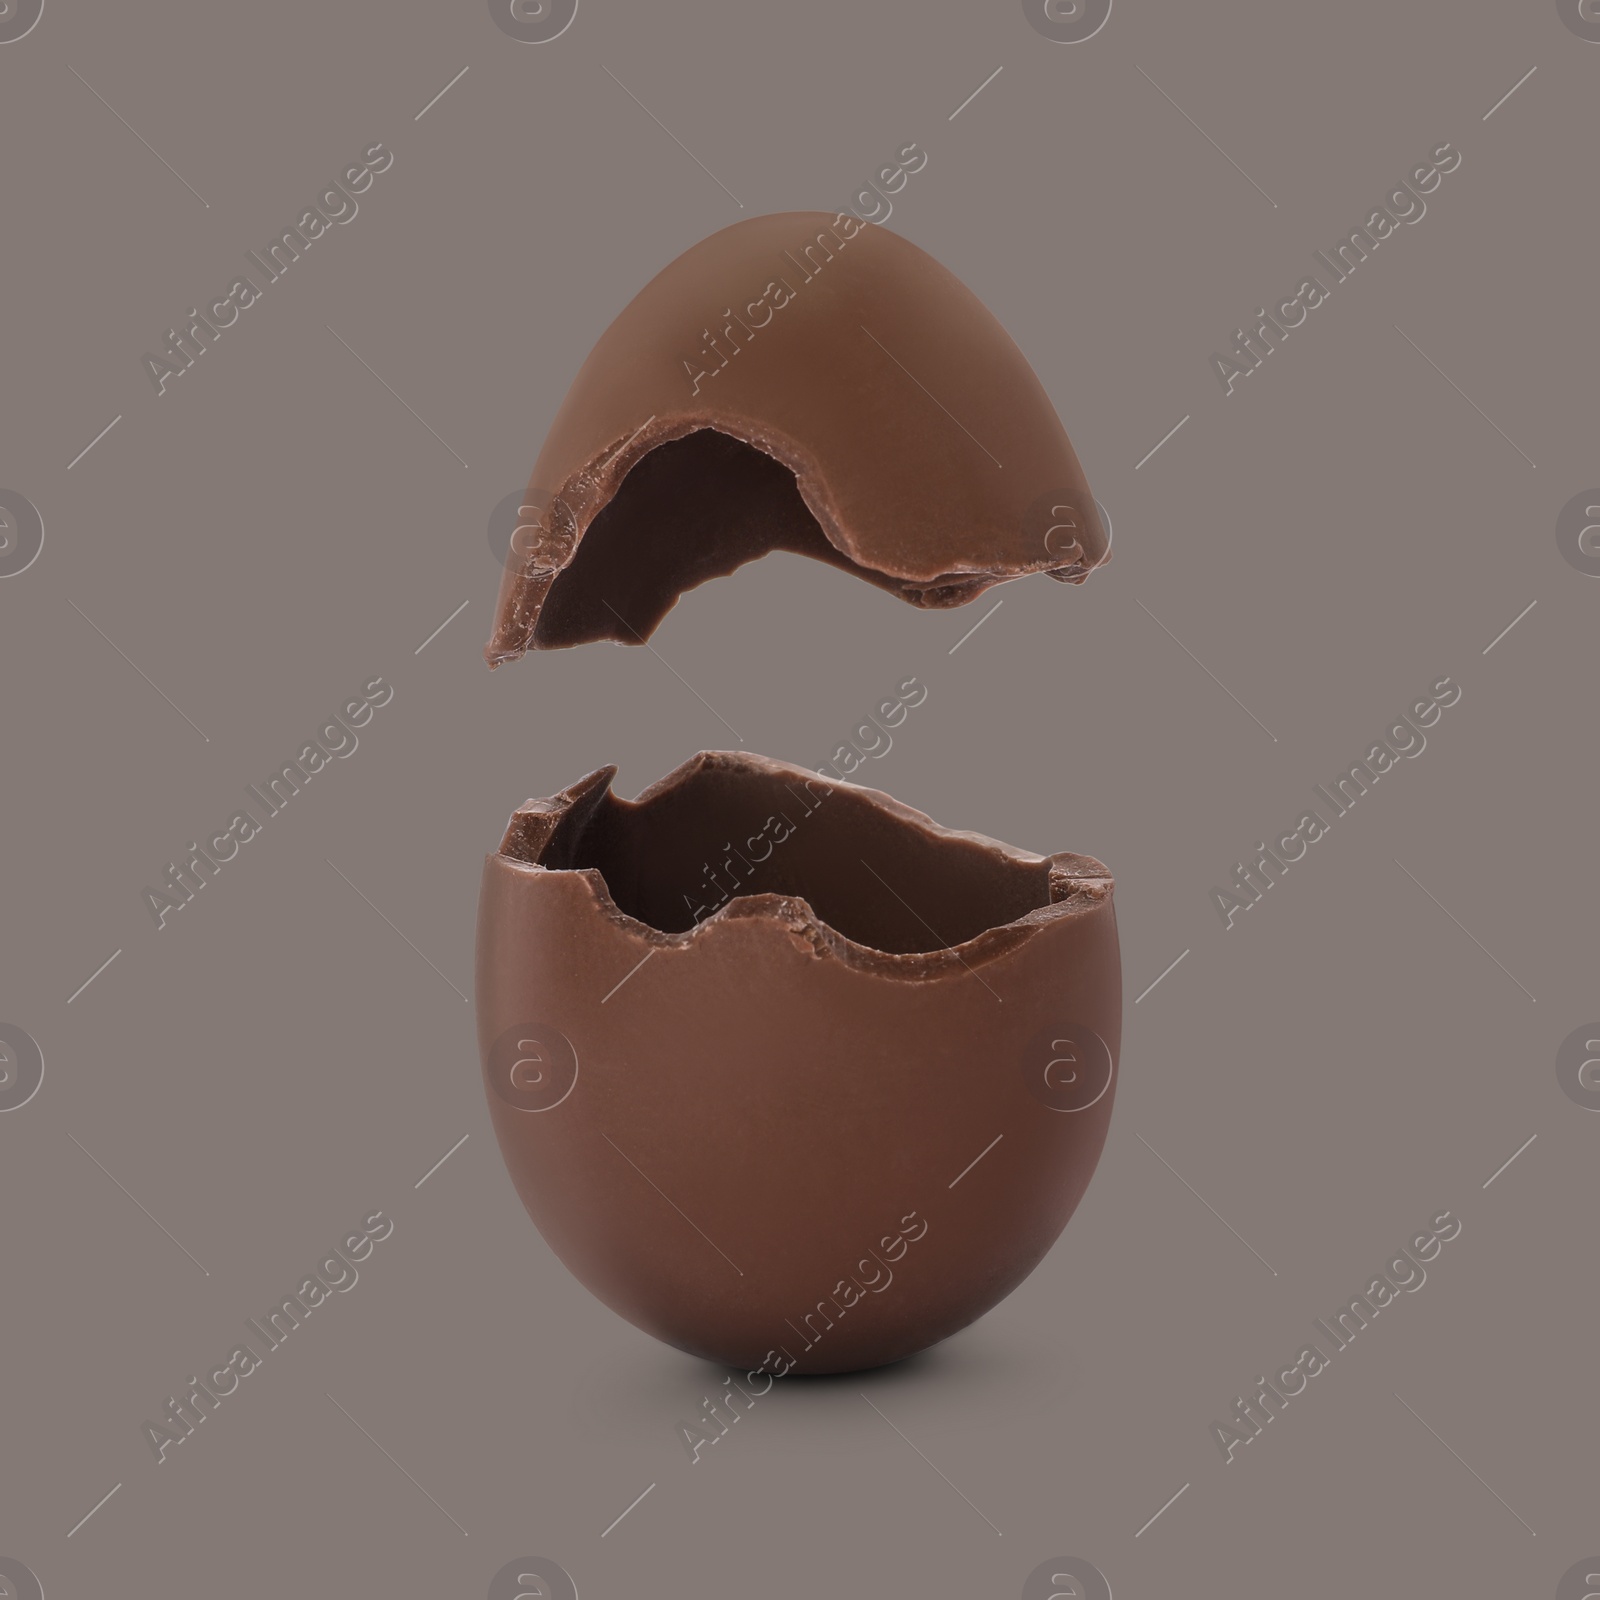 Image of Broken milk chocolate egg on grey background